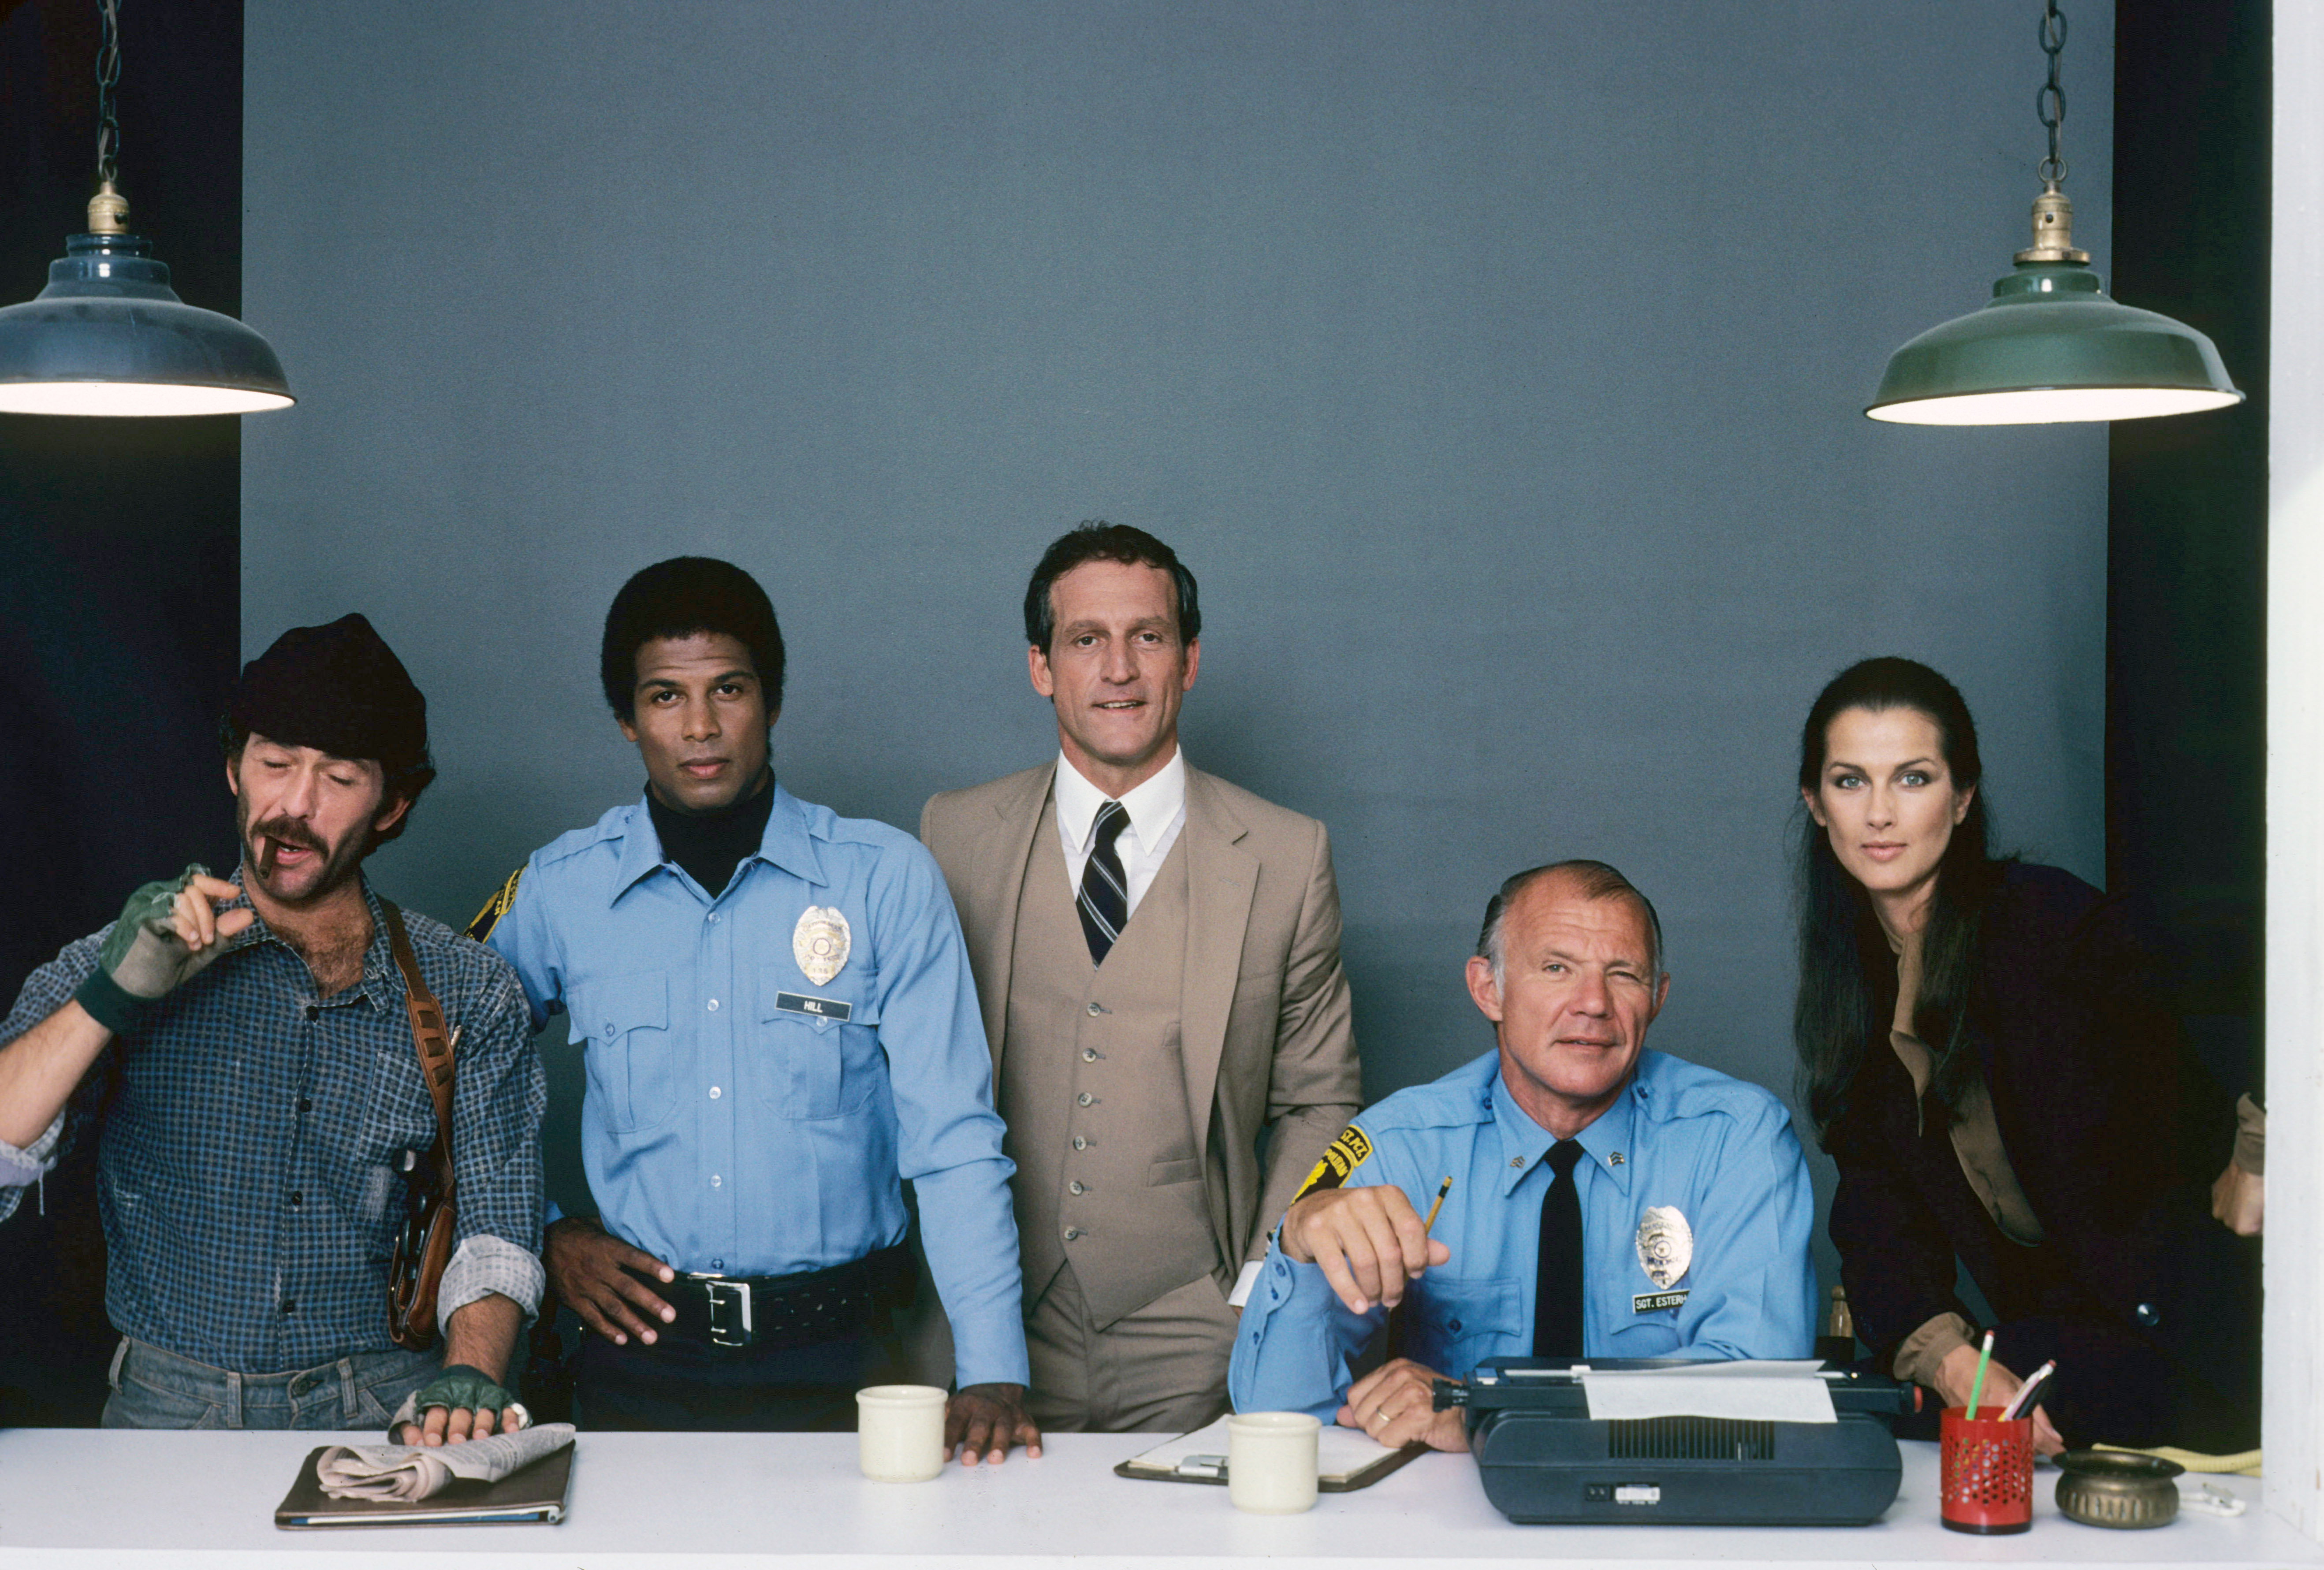 HILL STREET BLUES, from left: Bruce Weitz, Michael Warren, Daniel J. Travanti, Michael Conrad, Veronica Hamel, (Season 1), 1981-87. photo: Robert Phillips/Everett Collection